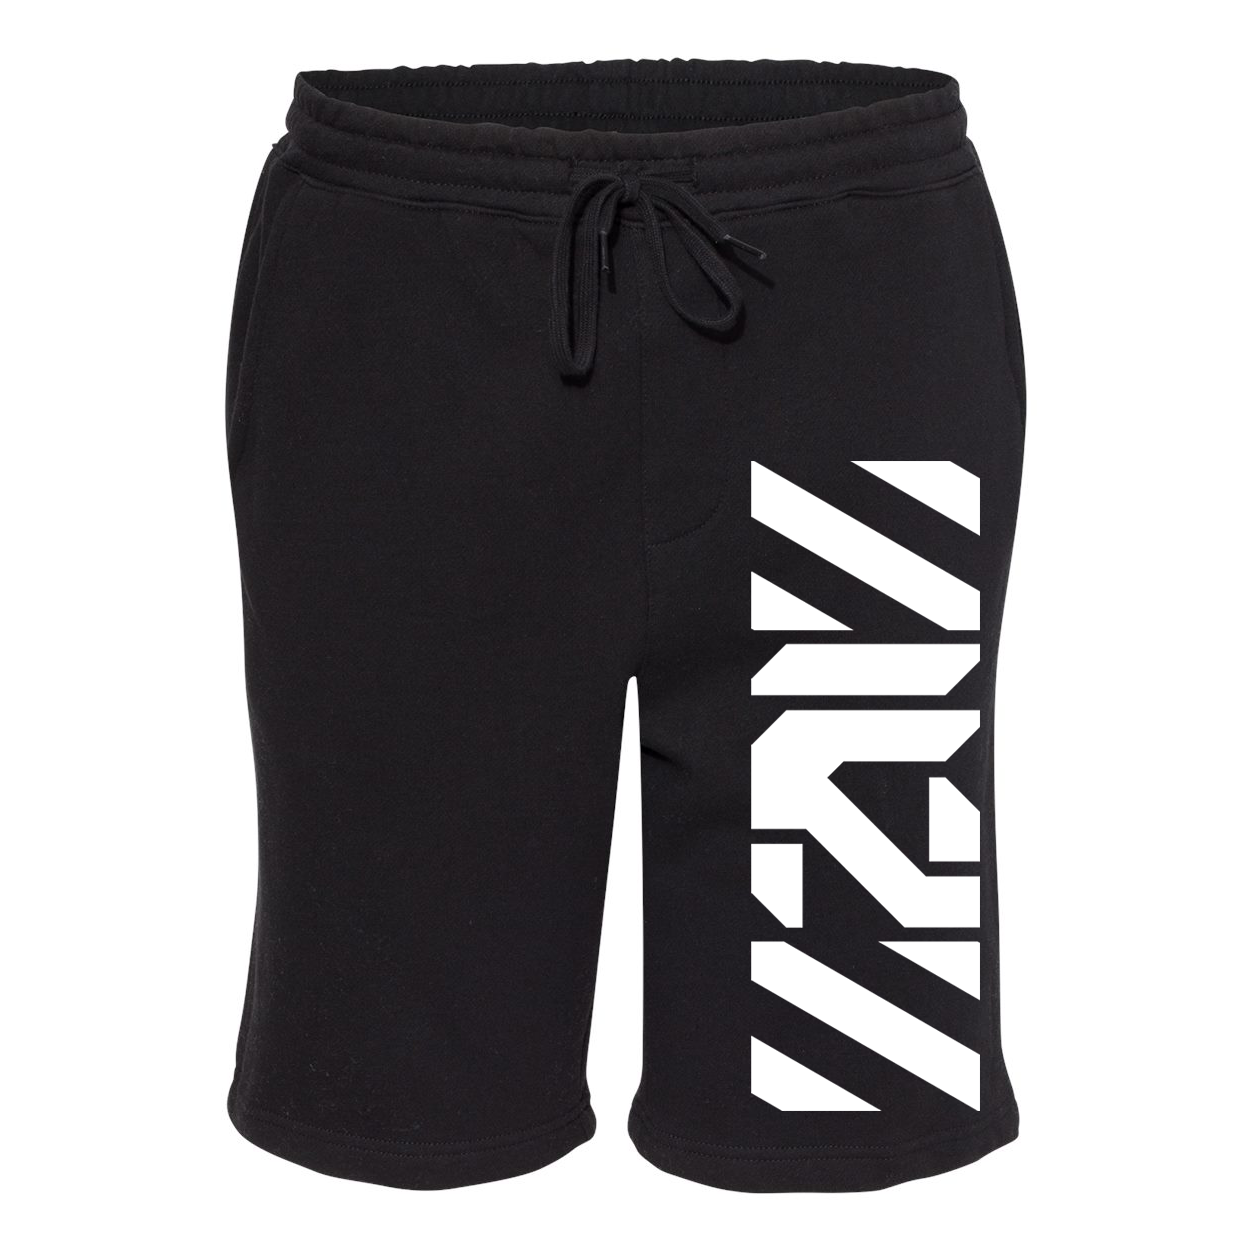 these shorts >> #fyp fake body, shorts